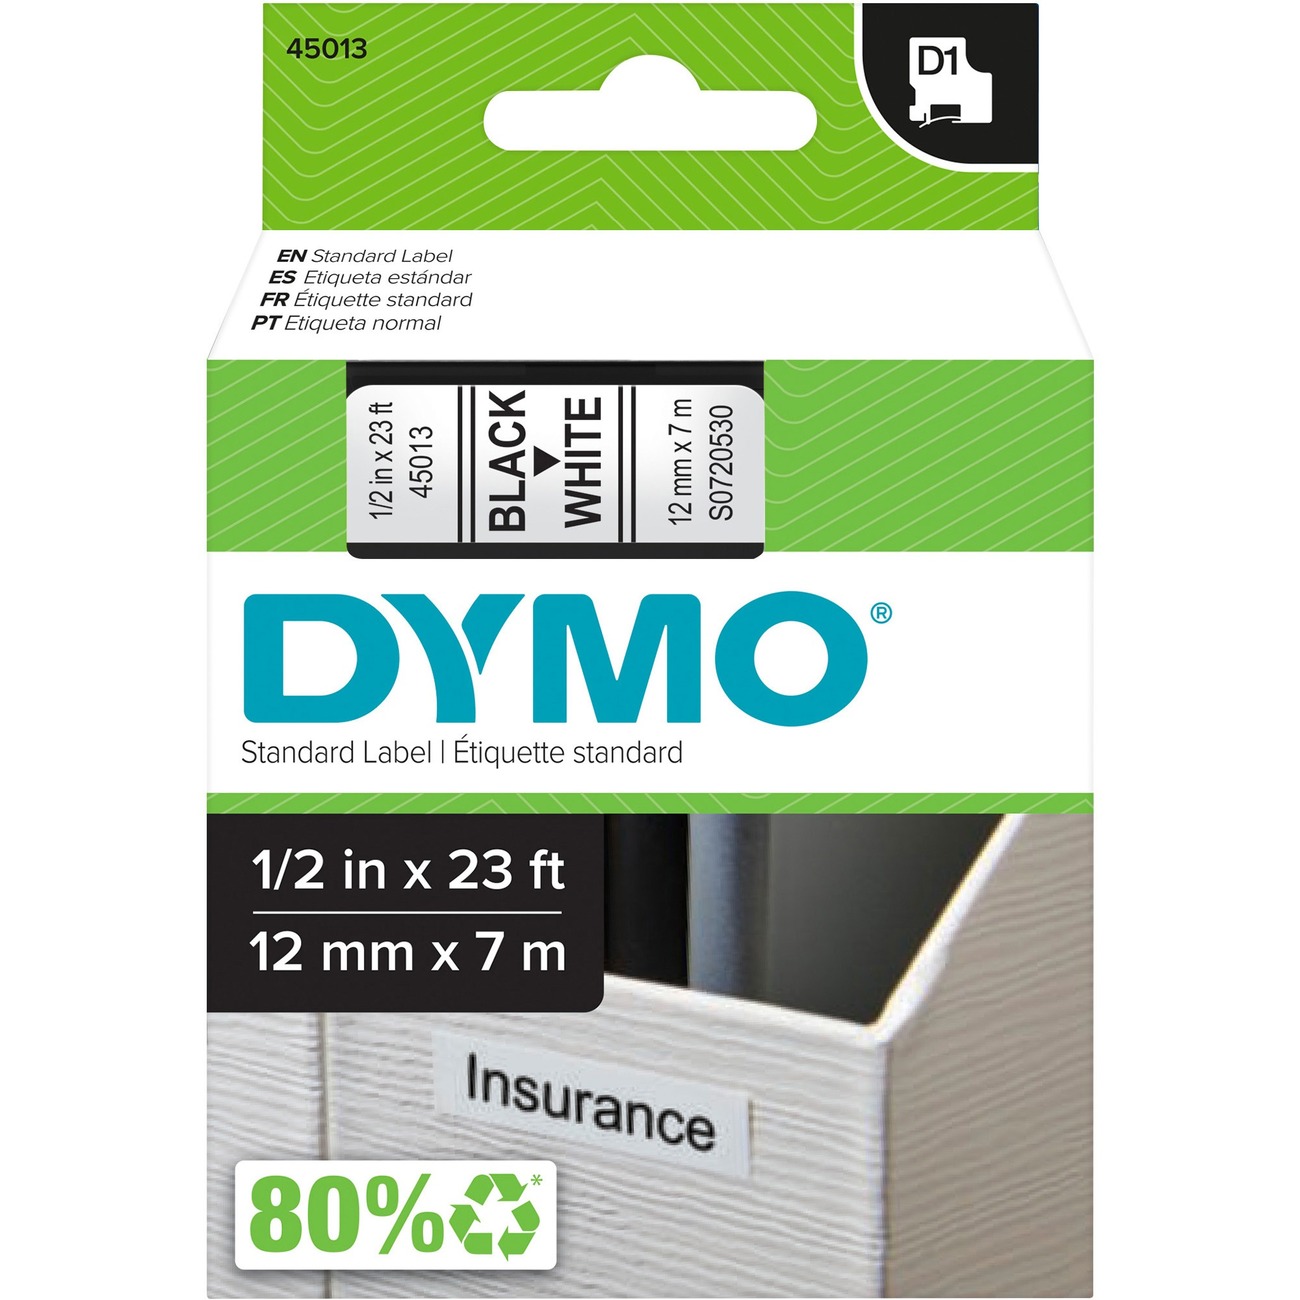 1/2 x 23 ft Dymo DYM45016 LabelWriter DUO D1 Label Tape Black on Blue 